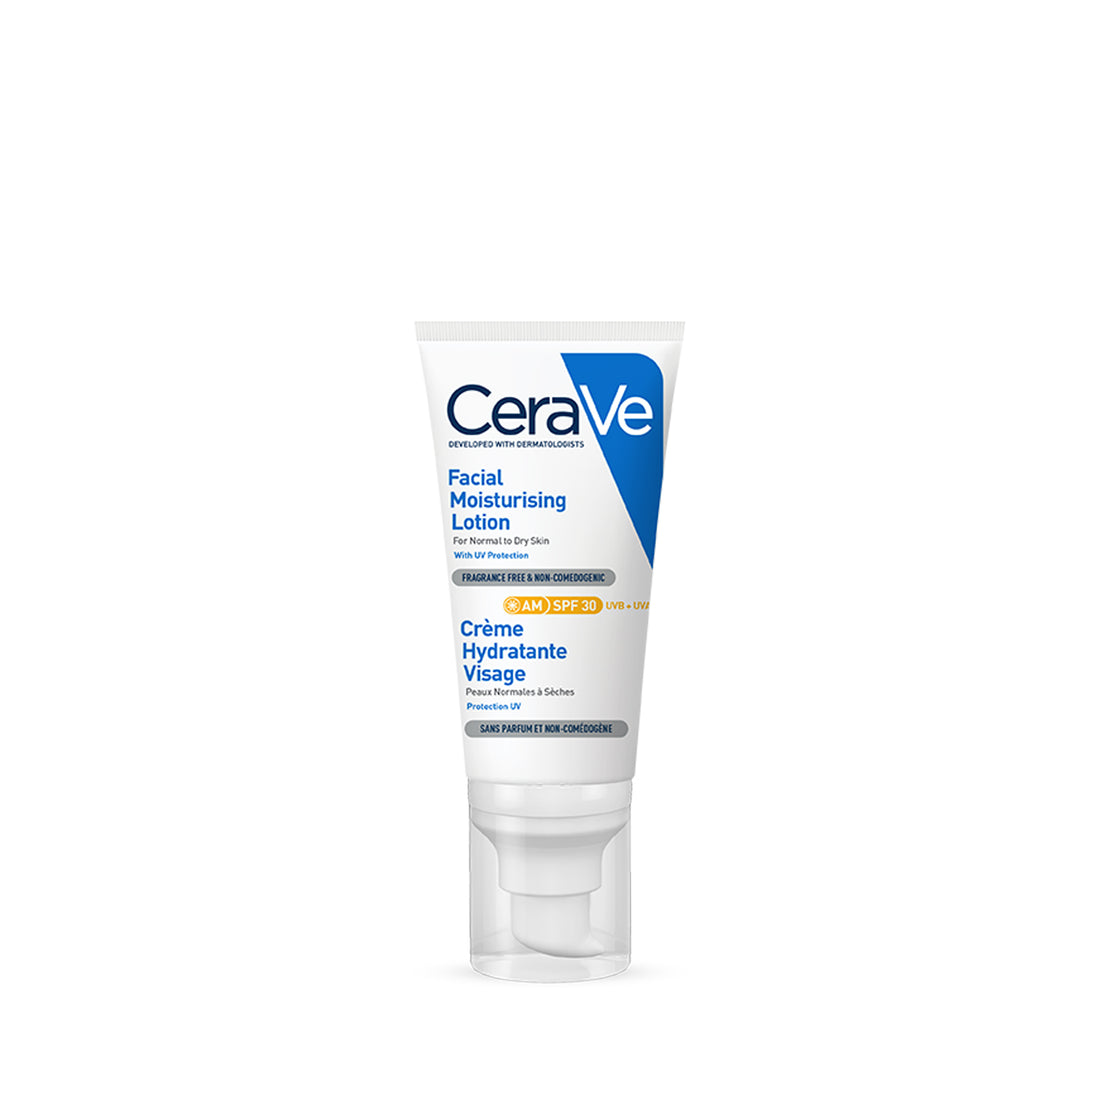 CeraVe Facial Moisturising Lotion SPF30 52ml (1.76 fl oz)